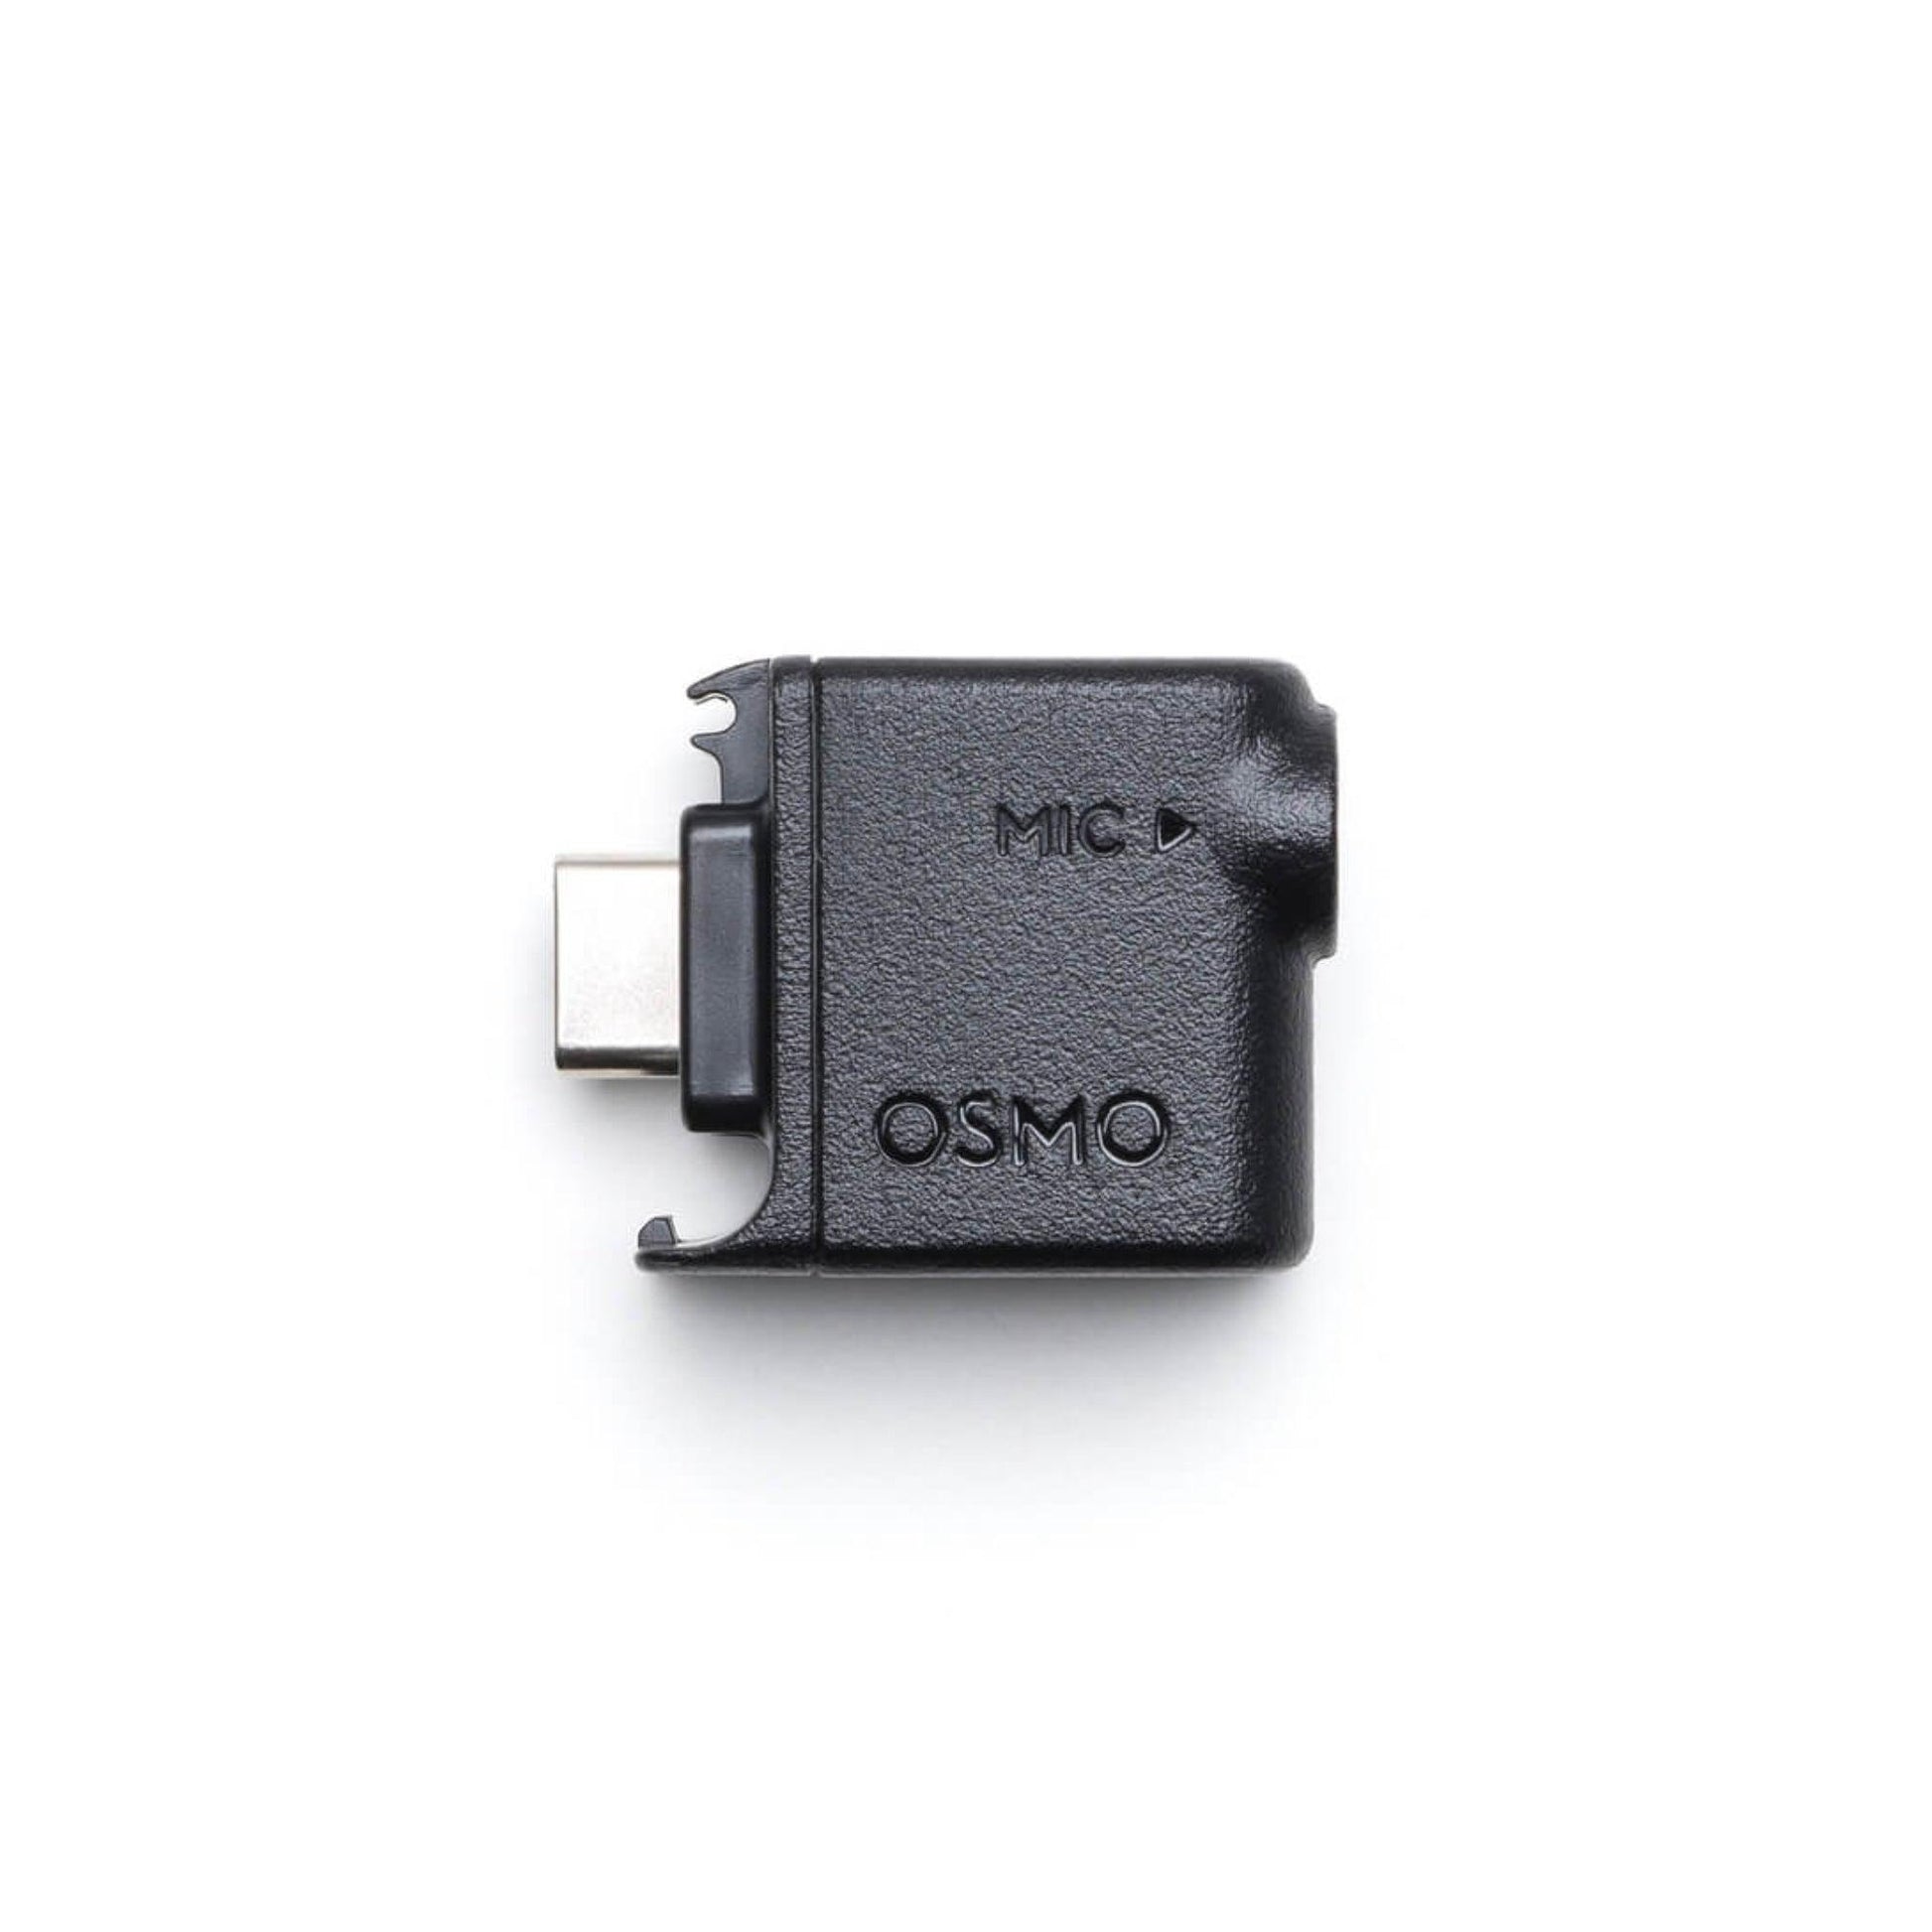 Osmo Action 3.5mm Audio Adapter - Silverlight Optics